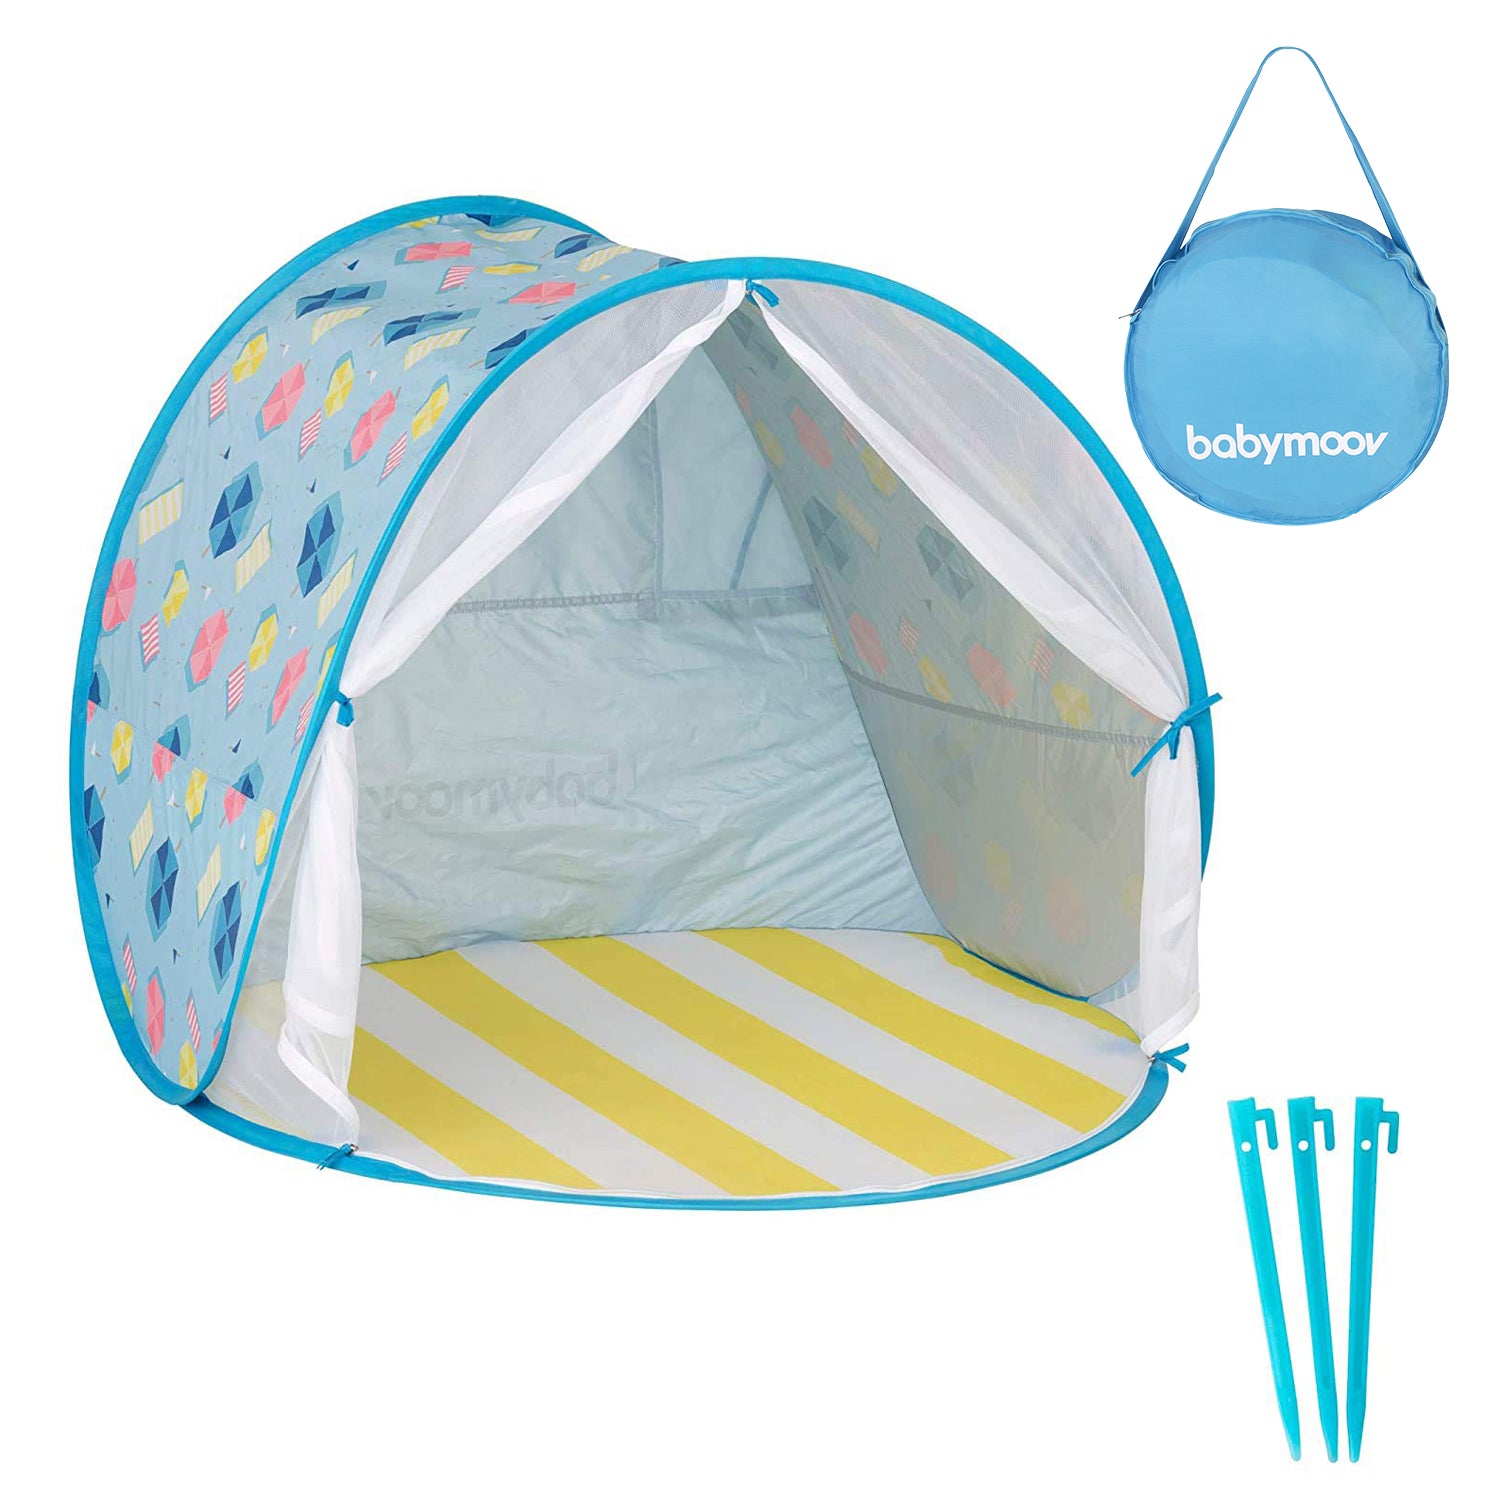 talent Geval Notitie Anti-UV Parasol Pop Up Tent *OPEN BOX*